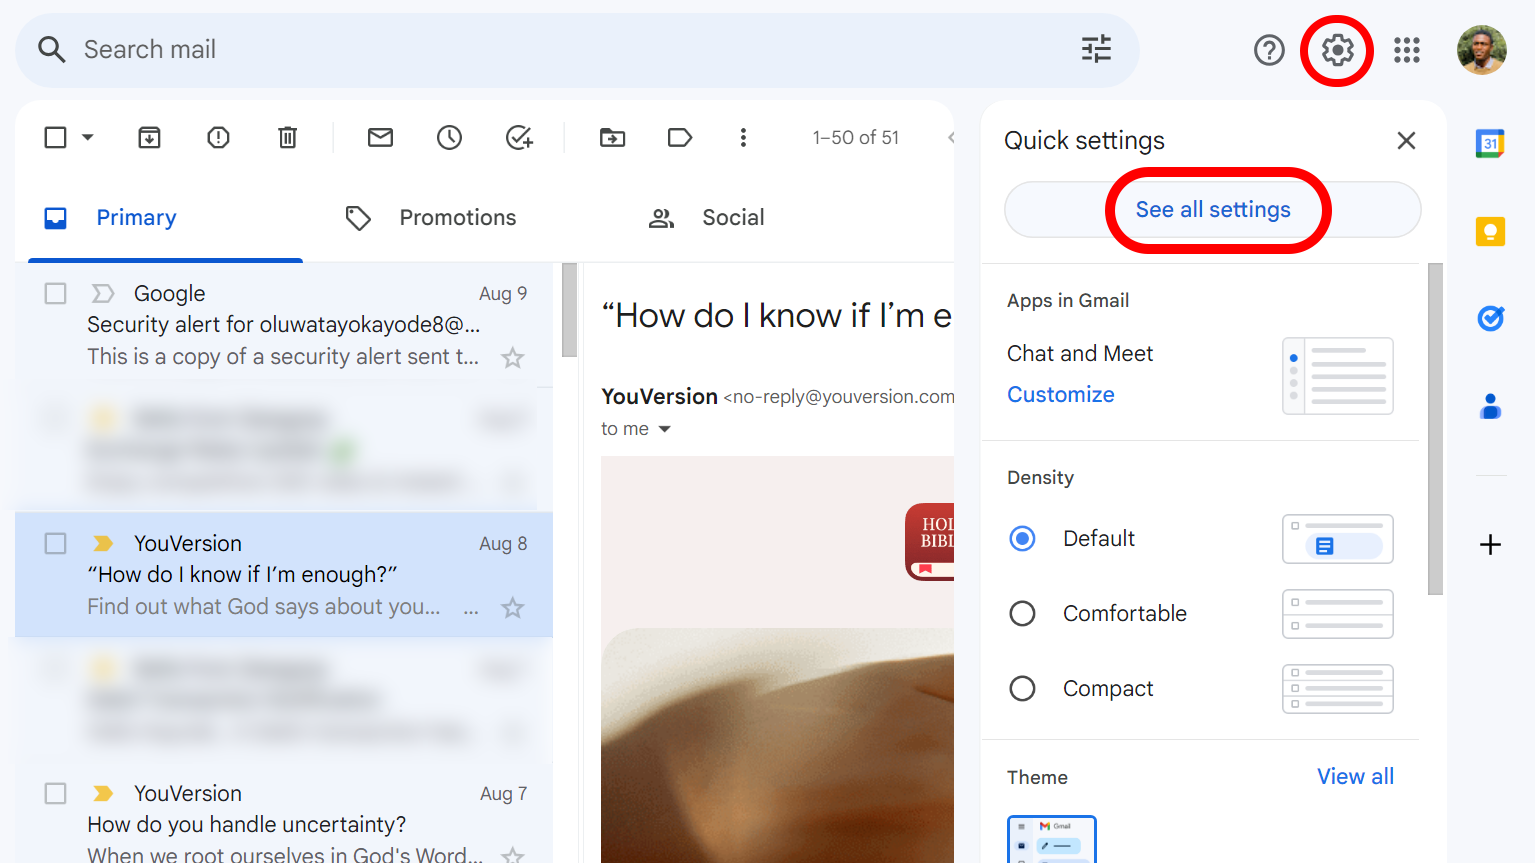 Opening Gmail settings interface. 